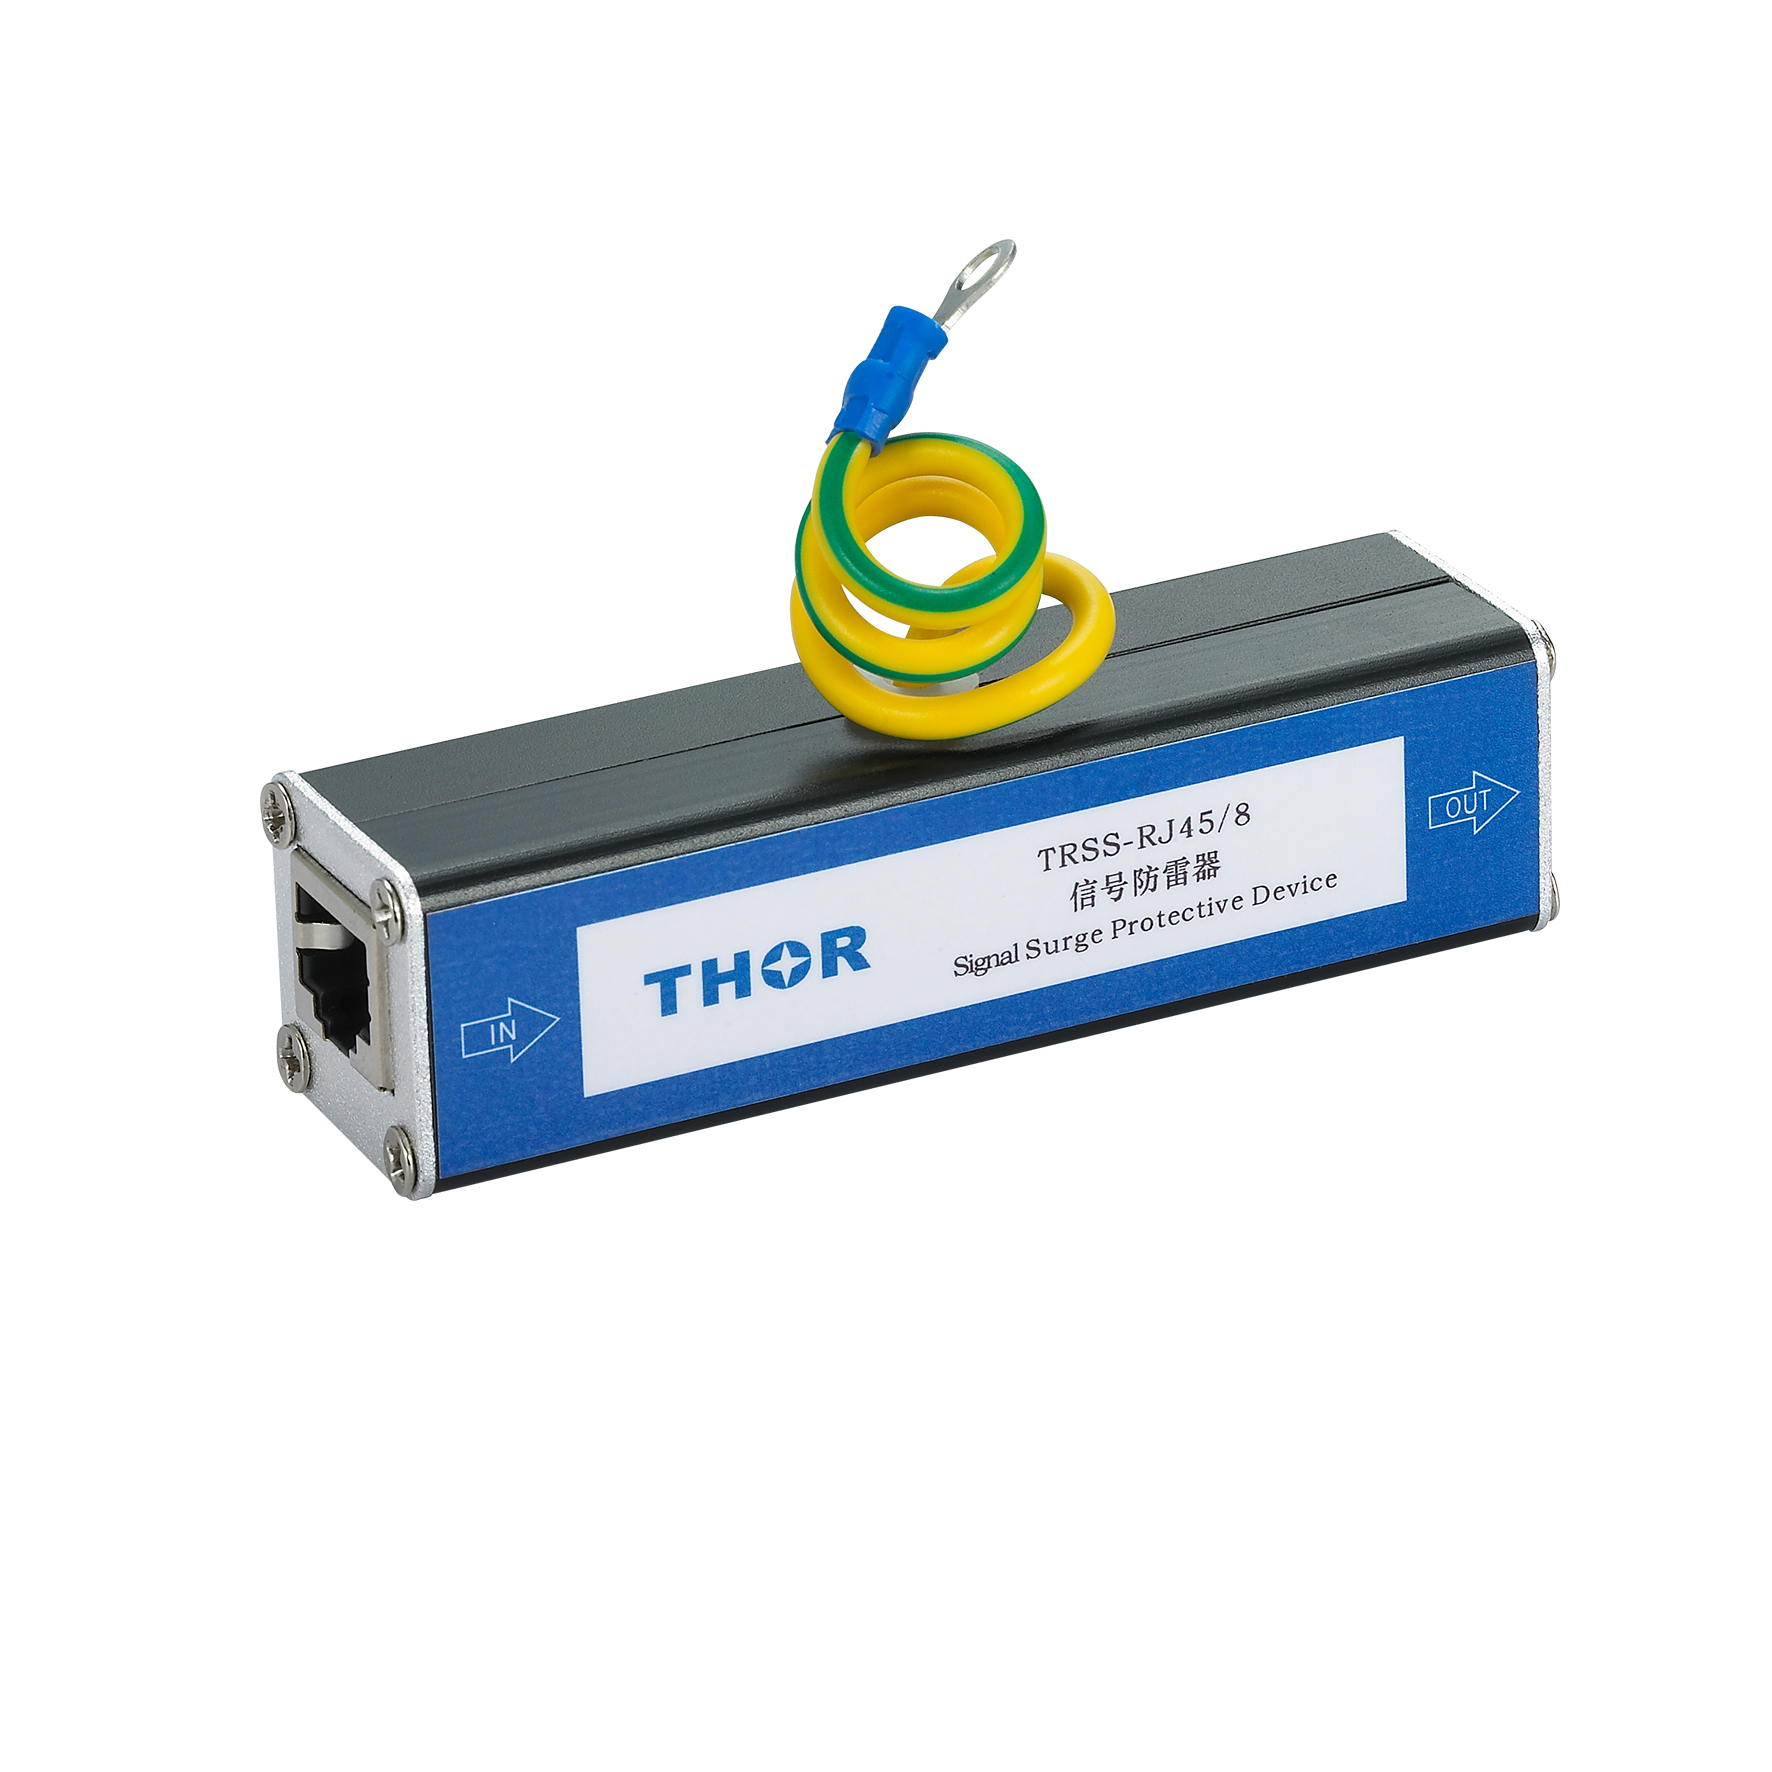 Ethernet surge protector TRSS-RJ45 series